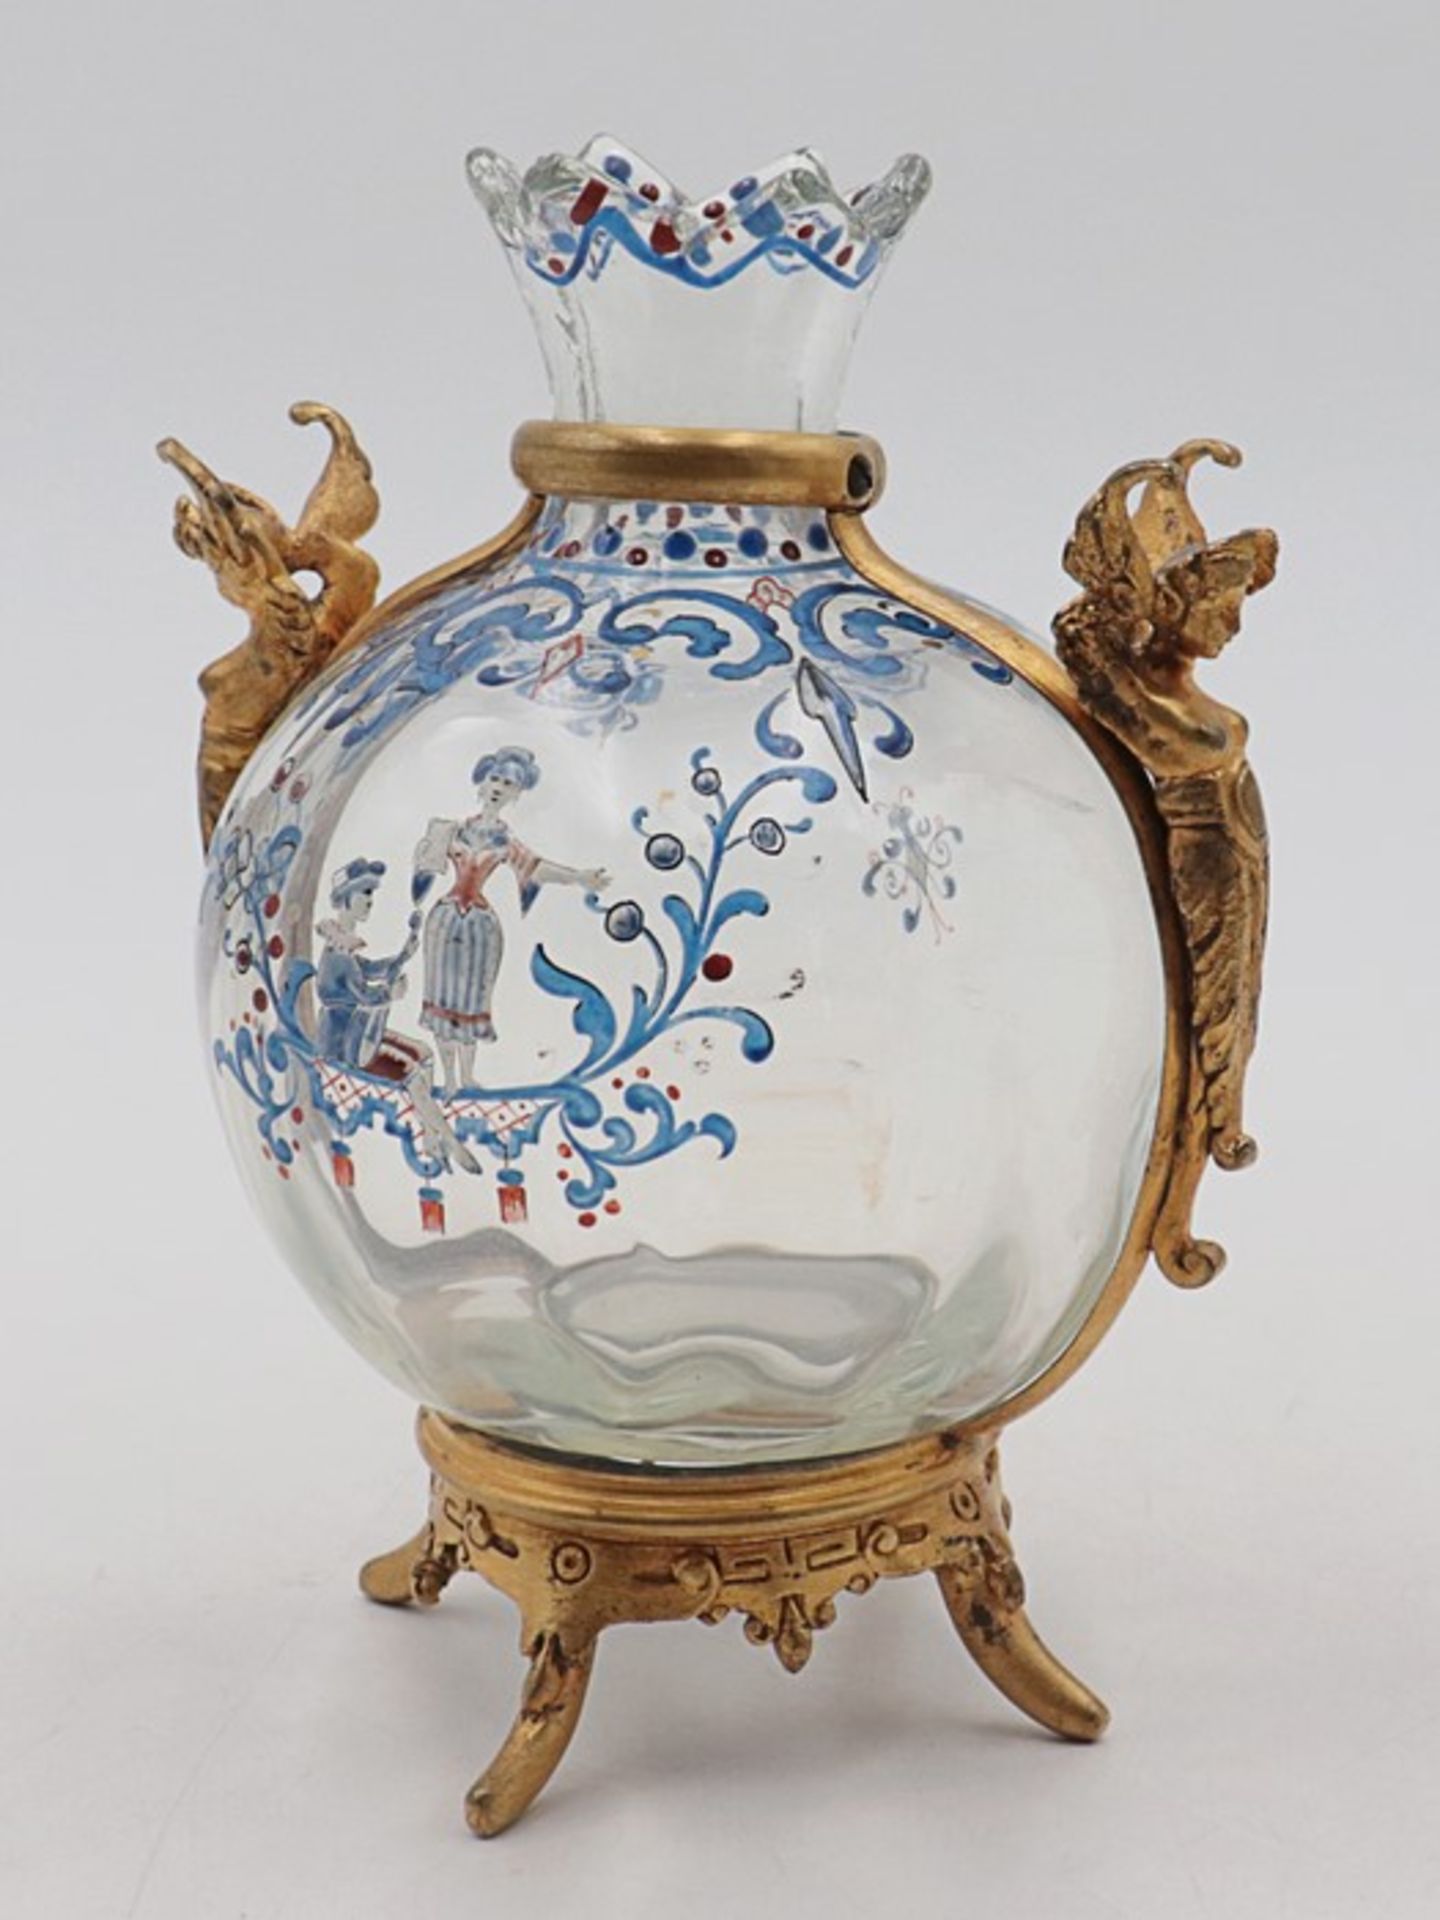 Gallé - Kugelvase1880 - 1884, Historismus, Emile Gallé, Nancy, Frankreich, farbloses dickw. Glas, - Image 2 of 8